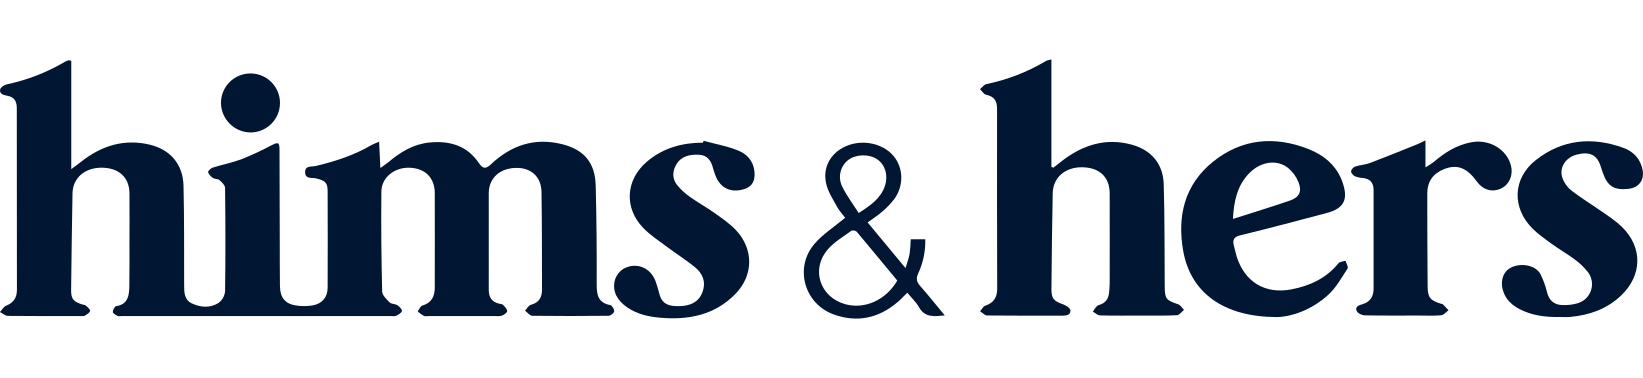 himsandhers-logo-navy